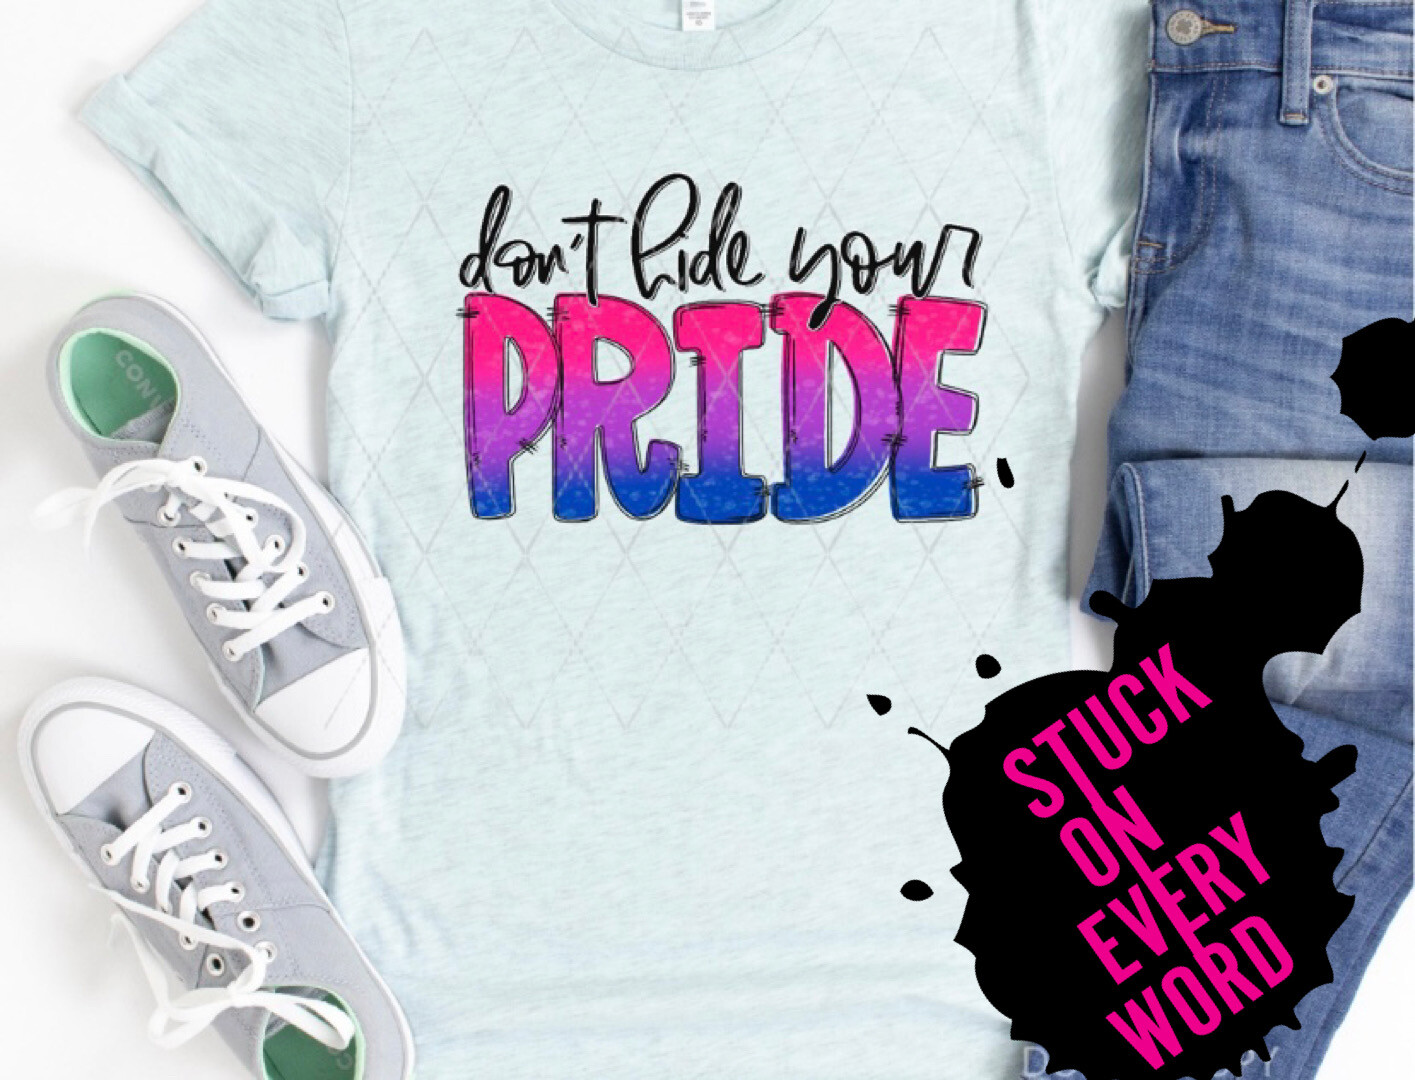 Don't Hide Your Pride (Bisexual)